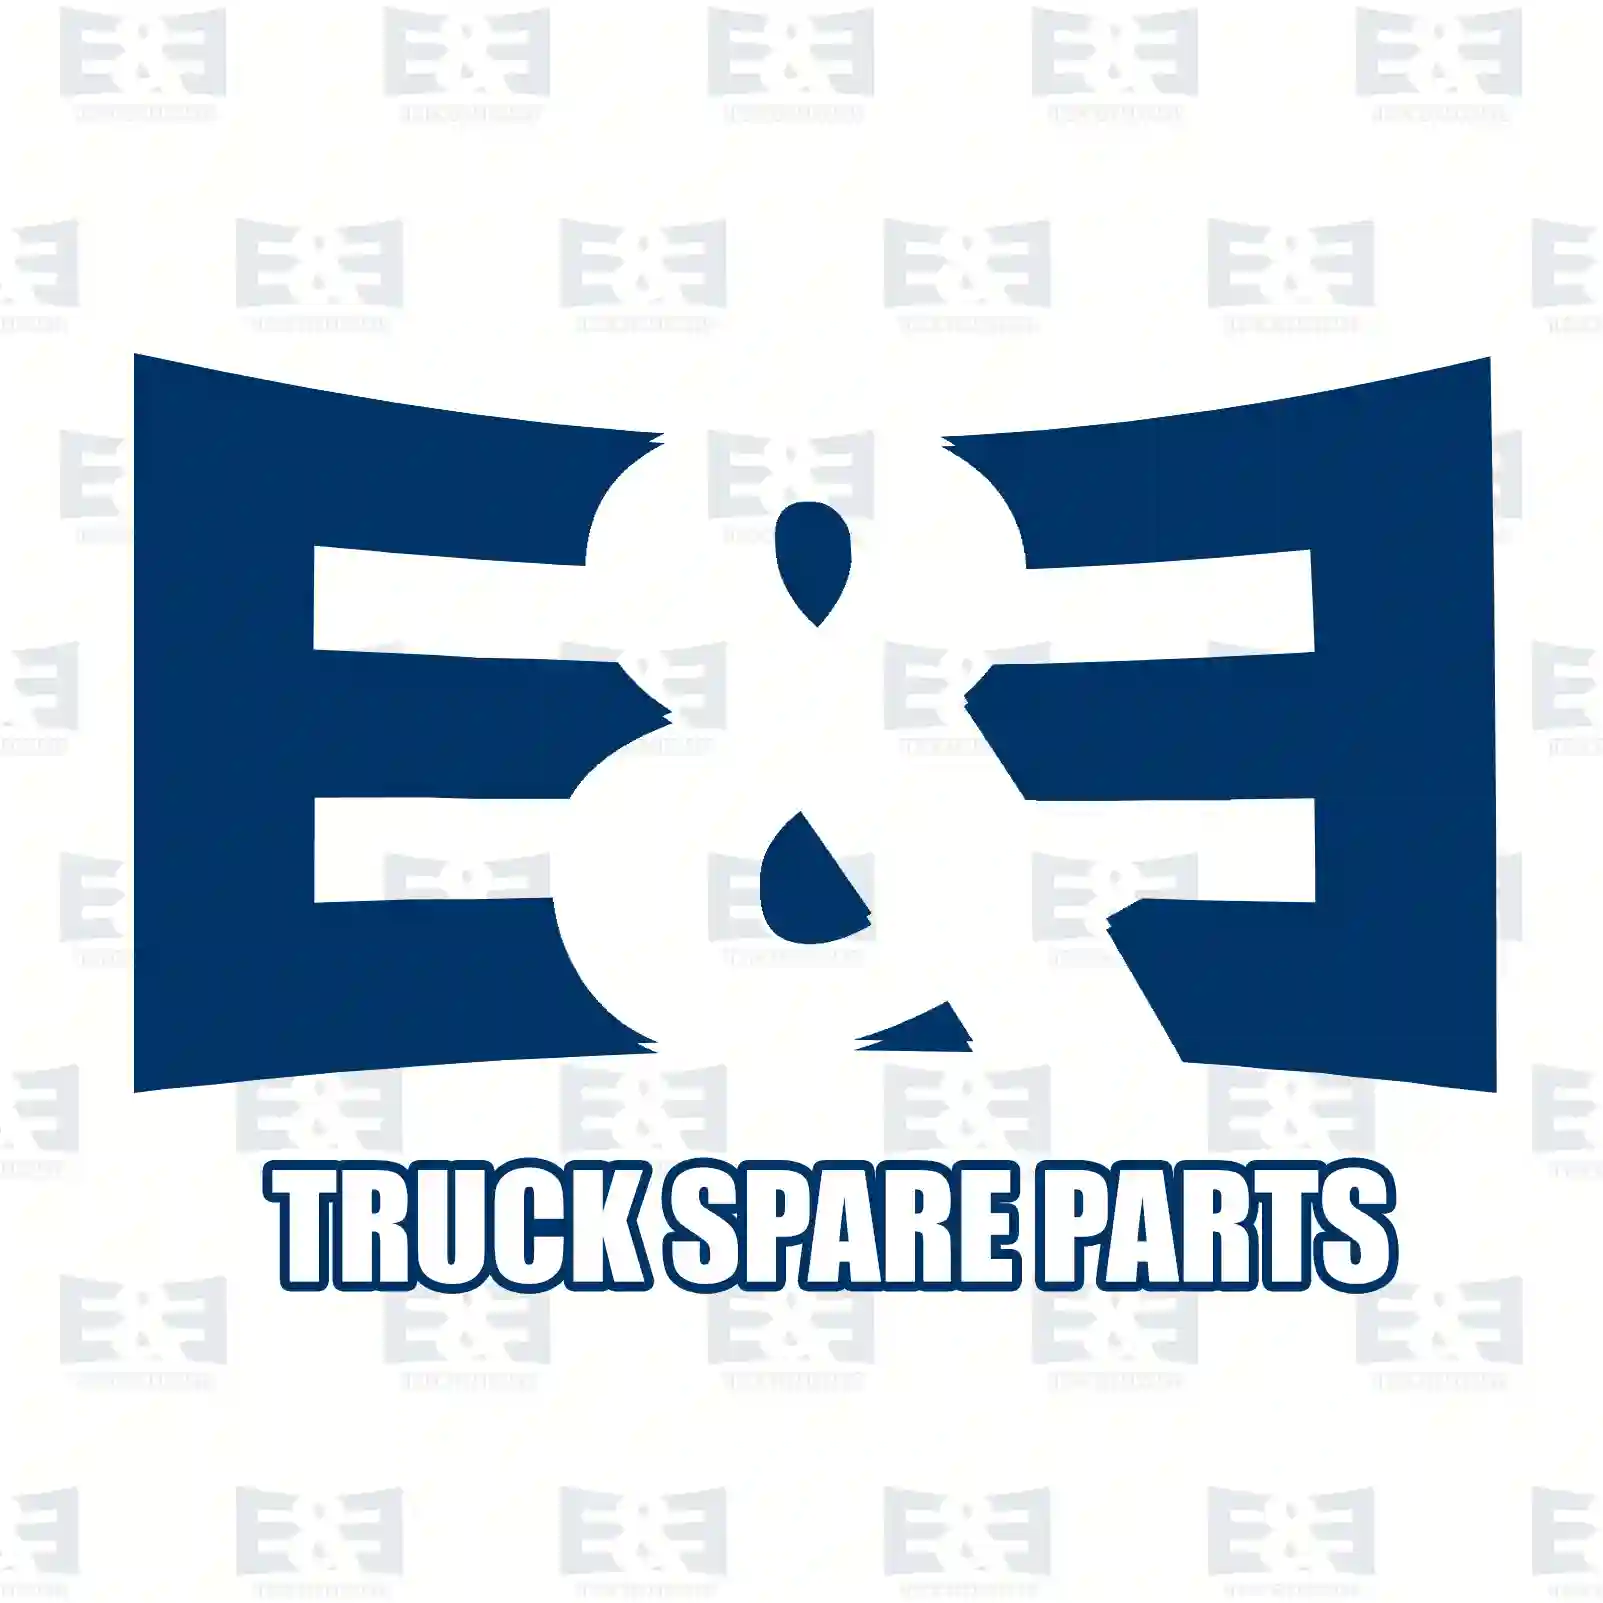  Fan motor || E&E Truck Spare Parts | Truck Spare Parts, Auotomotive Spare Parts